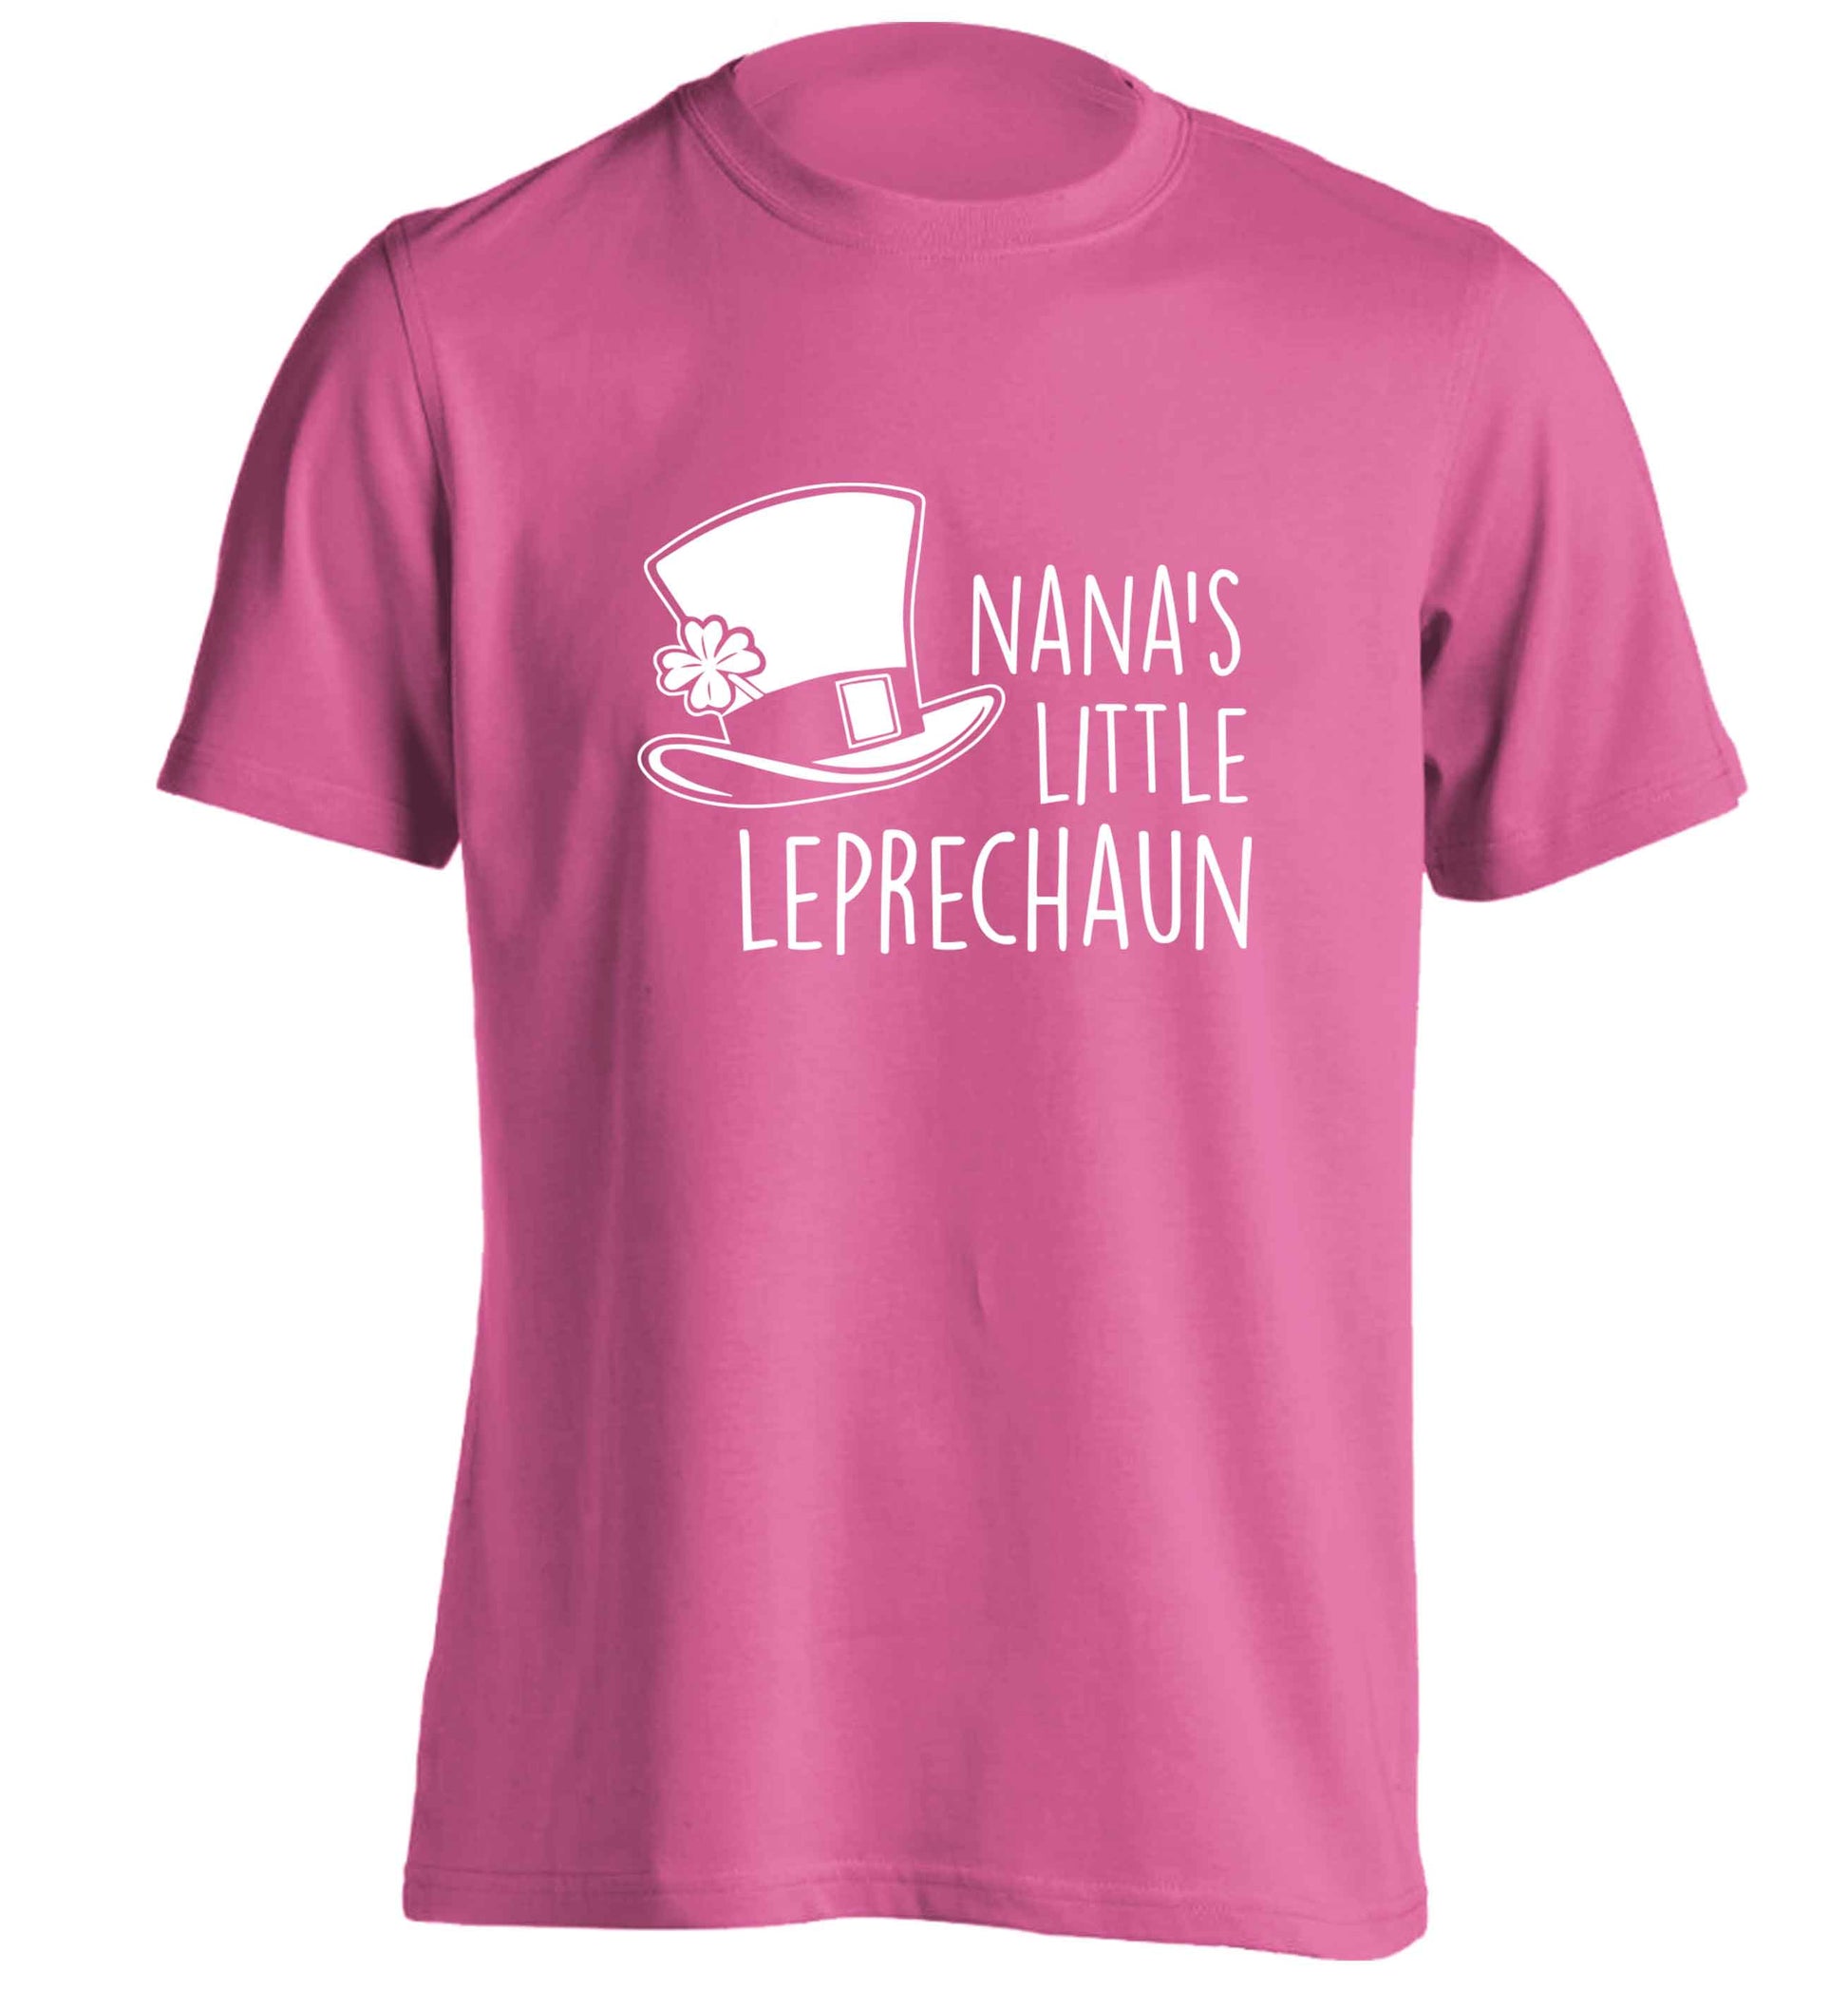 Nana's little leprechaun adults unisex pink Tshirt 2XL